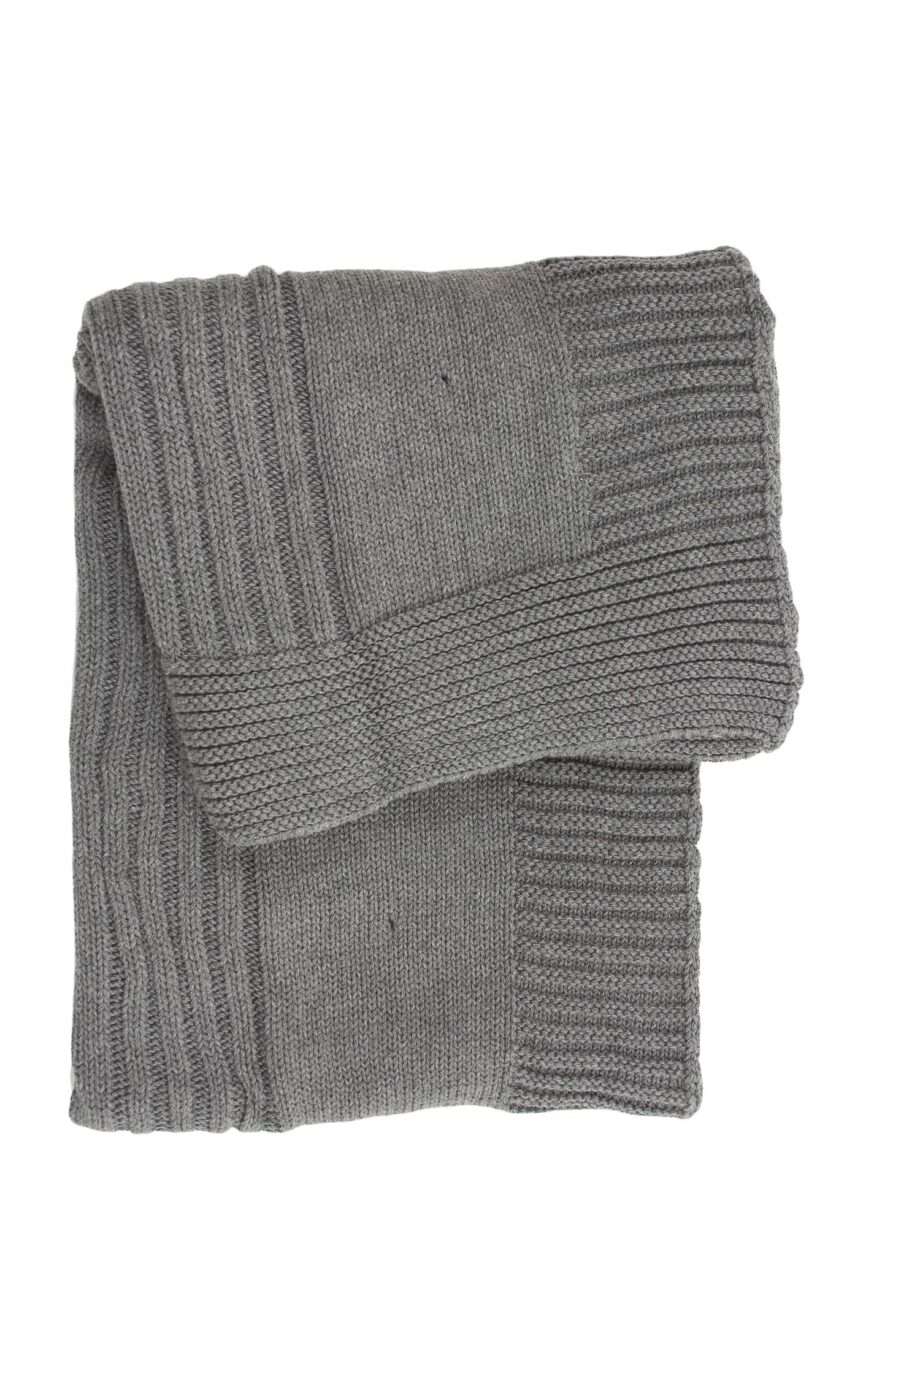 light grey knitted cotton little blanket medium